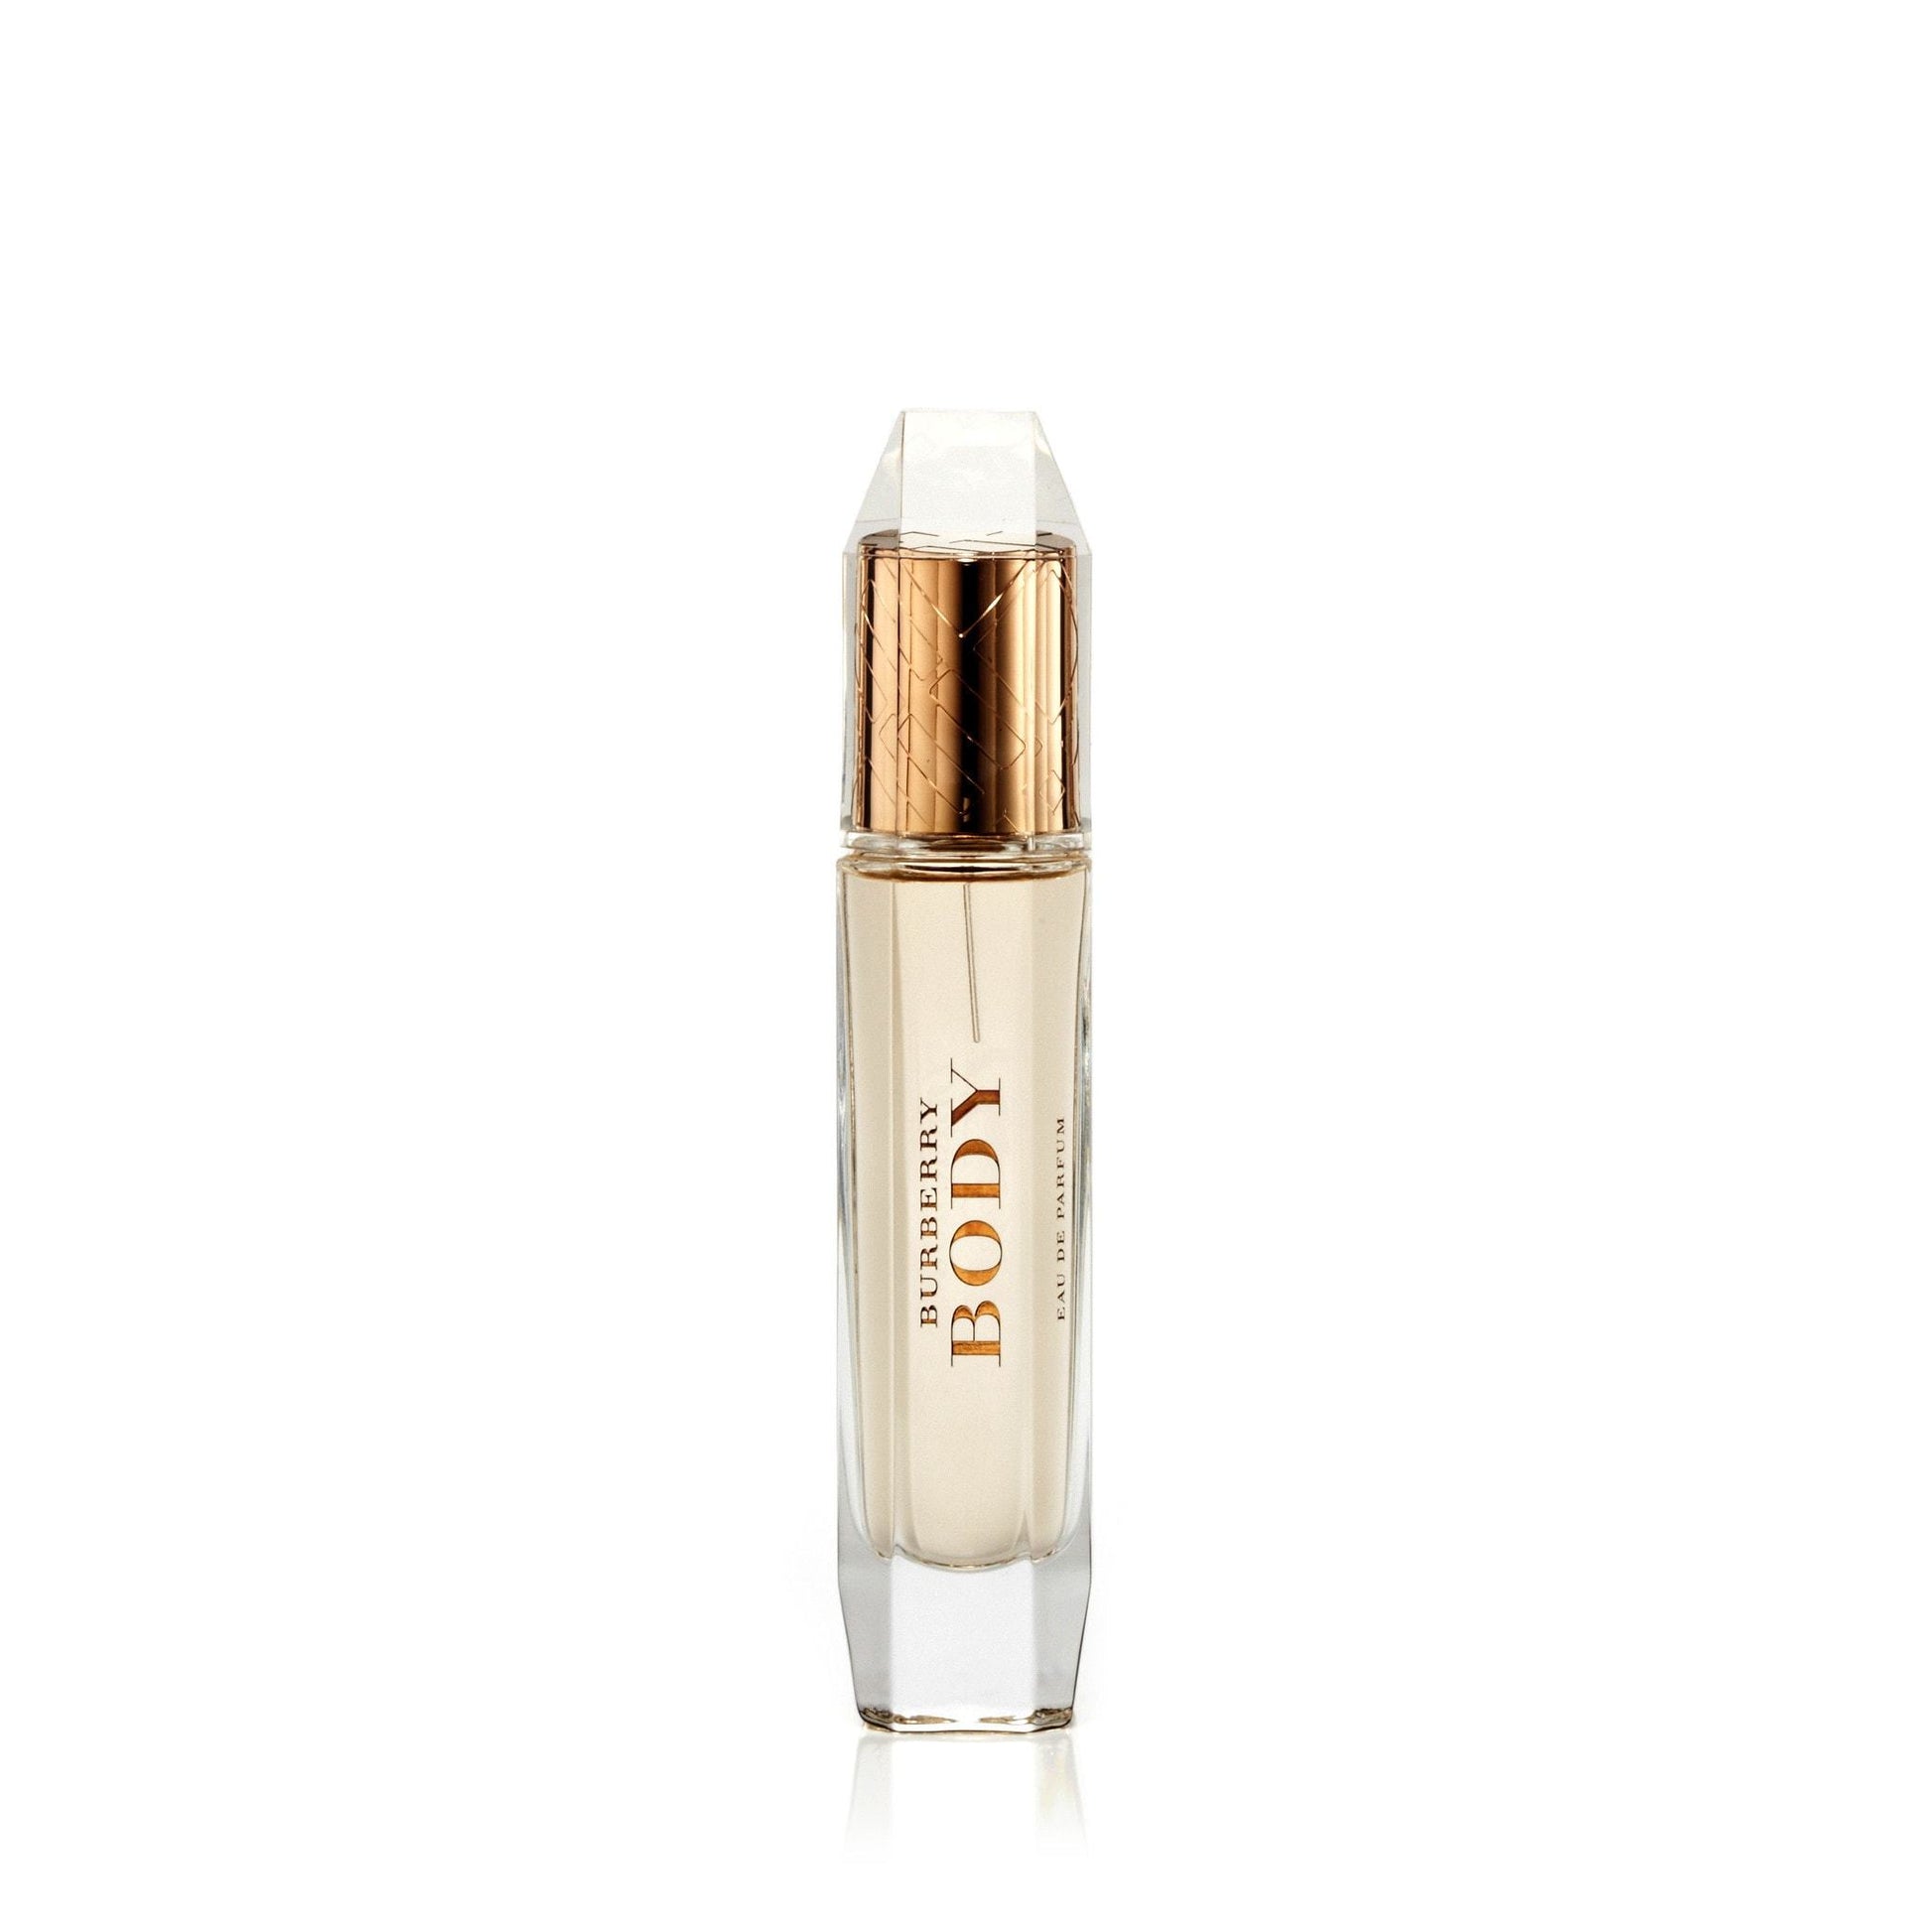 Body Eau de Parfum Spray for Women by Burberry, Product image 4